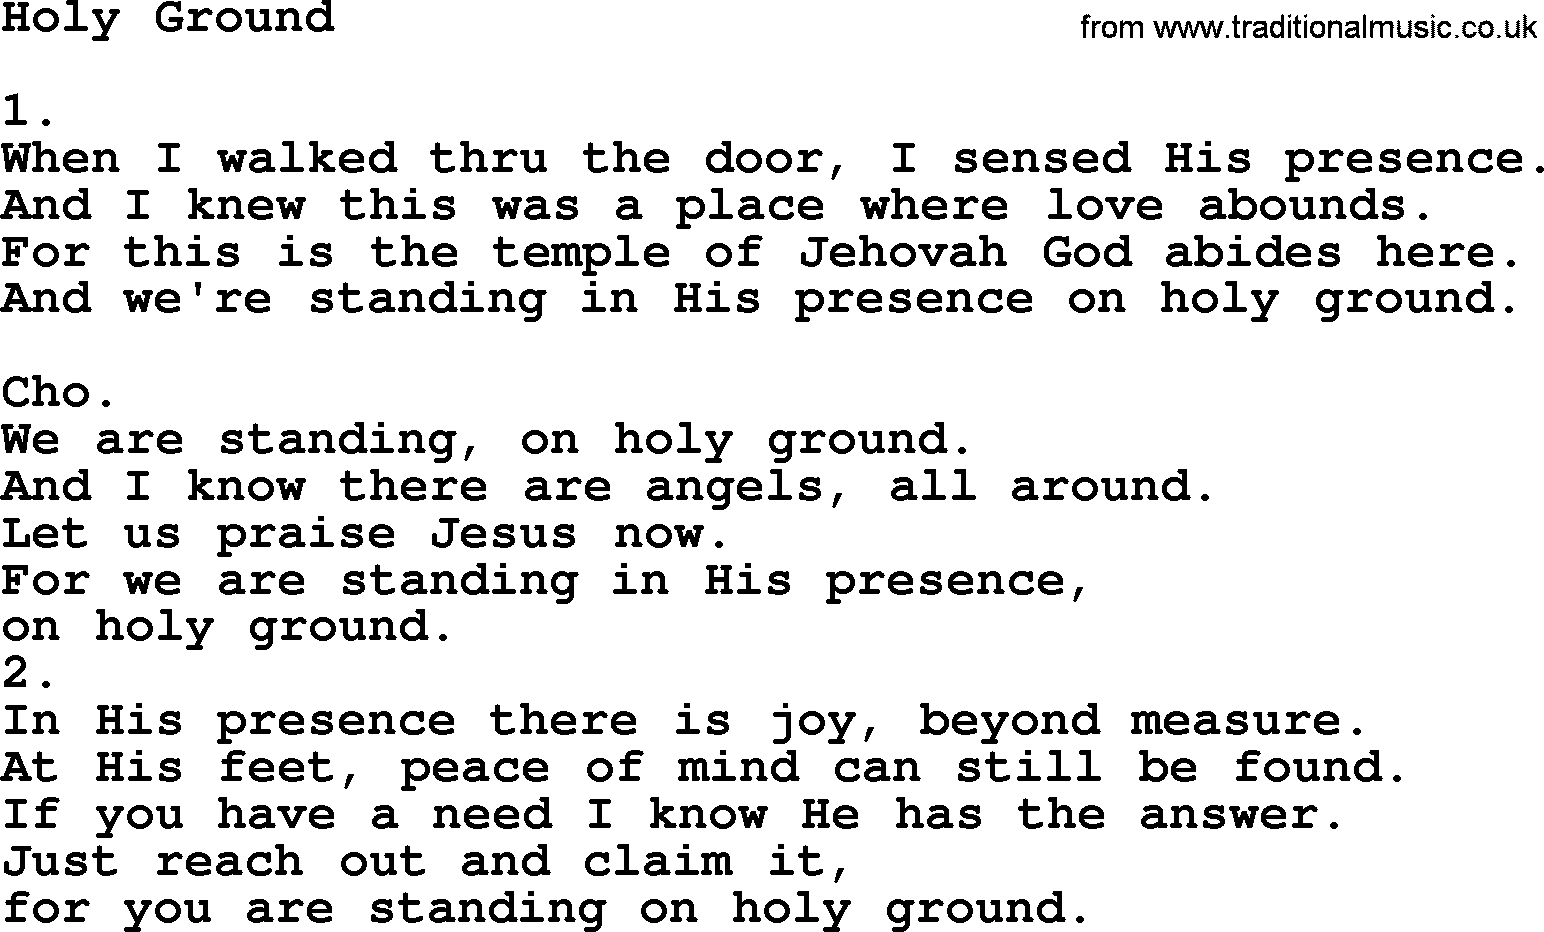 Holy Ground - Apostolic and Pentecostal Hymns and Songs lyrics, and PDF